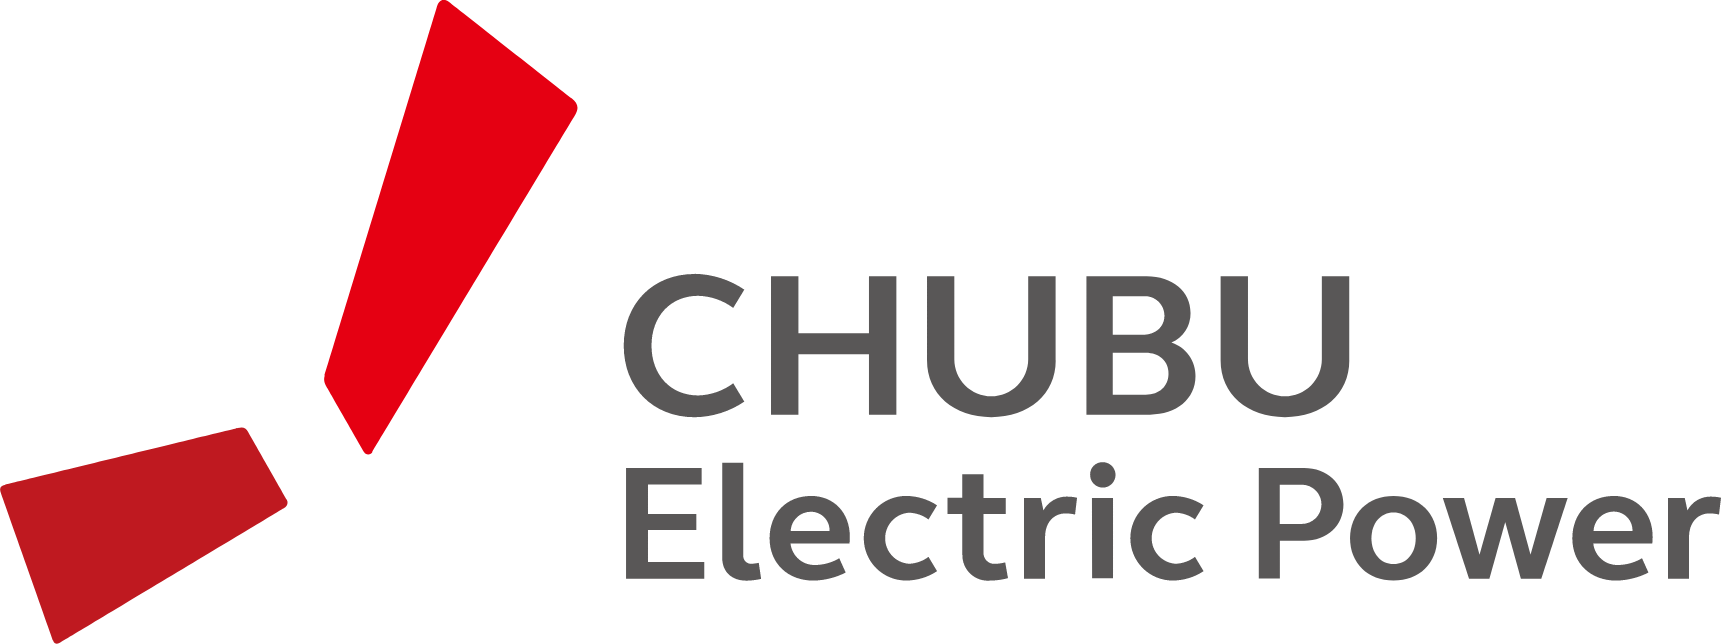 Electric Power Logo | Power logo, Energy logo, Electrical company logo